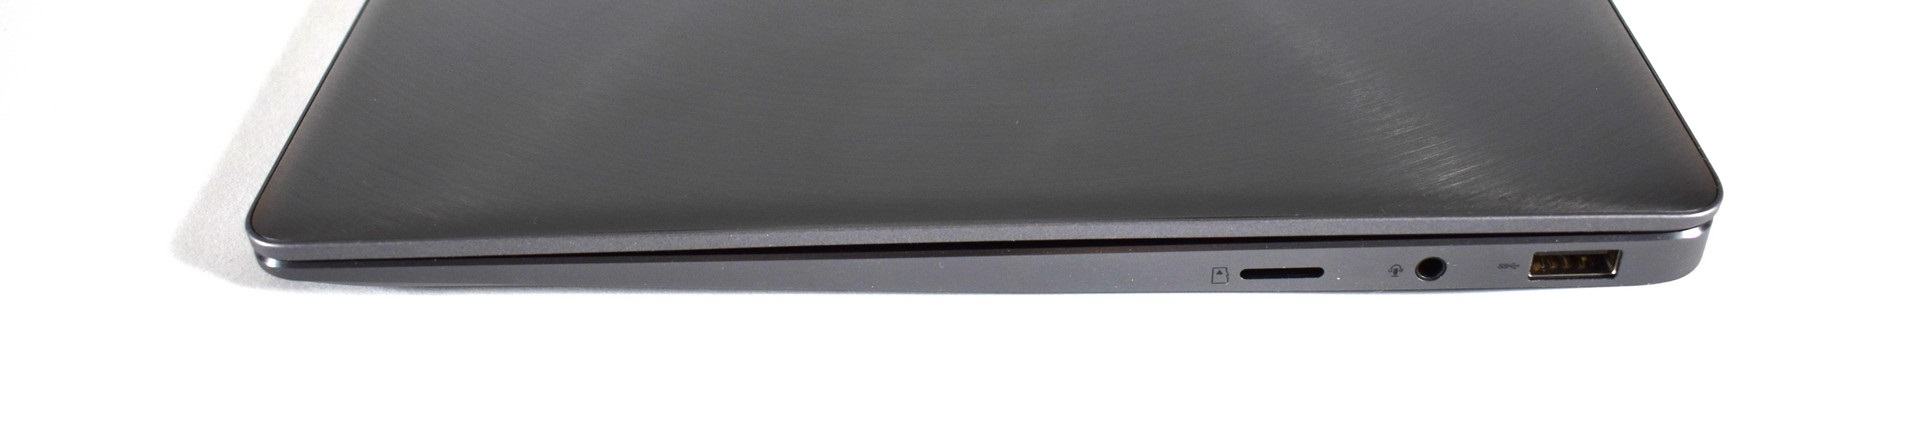 đánh giá Asus ZenBook UX331UN